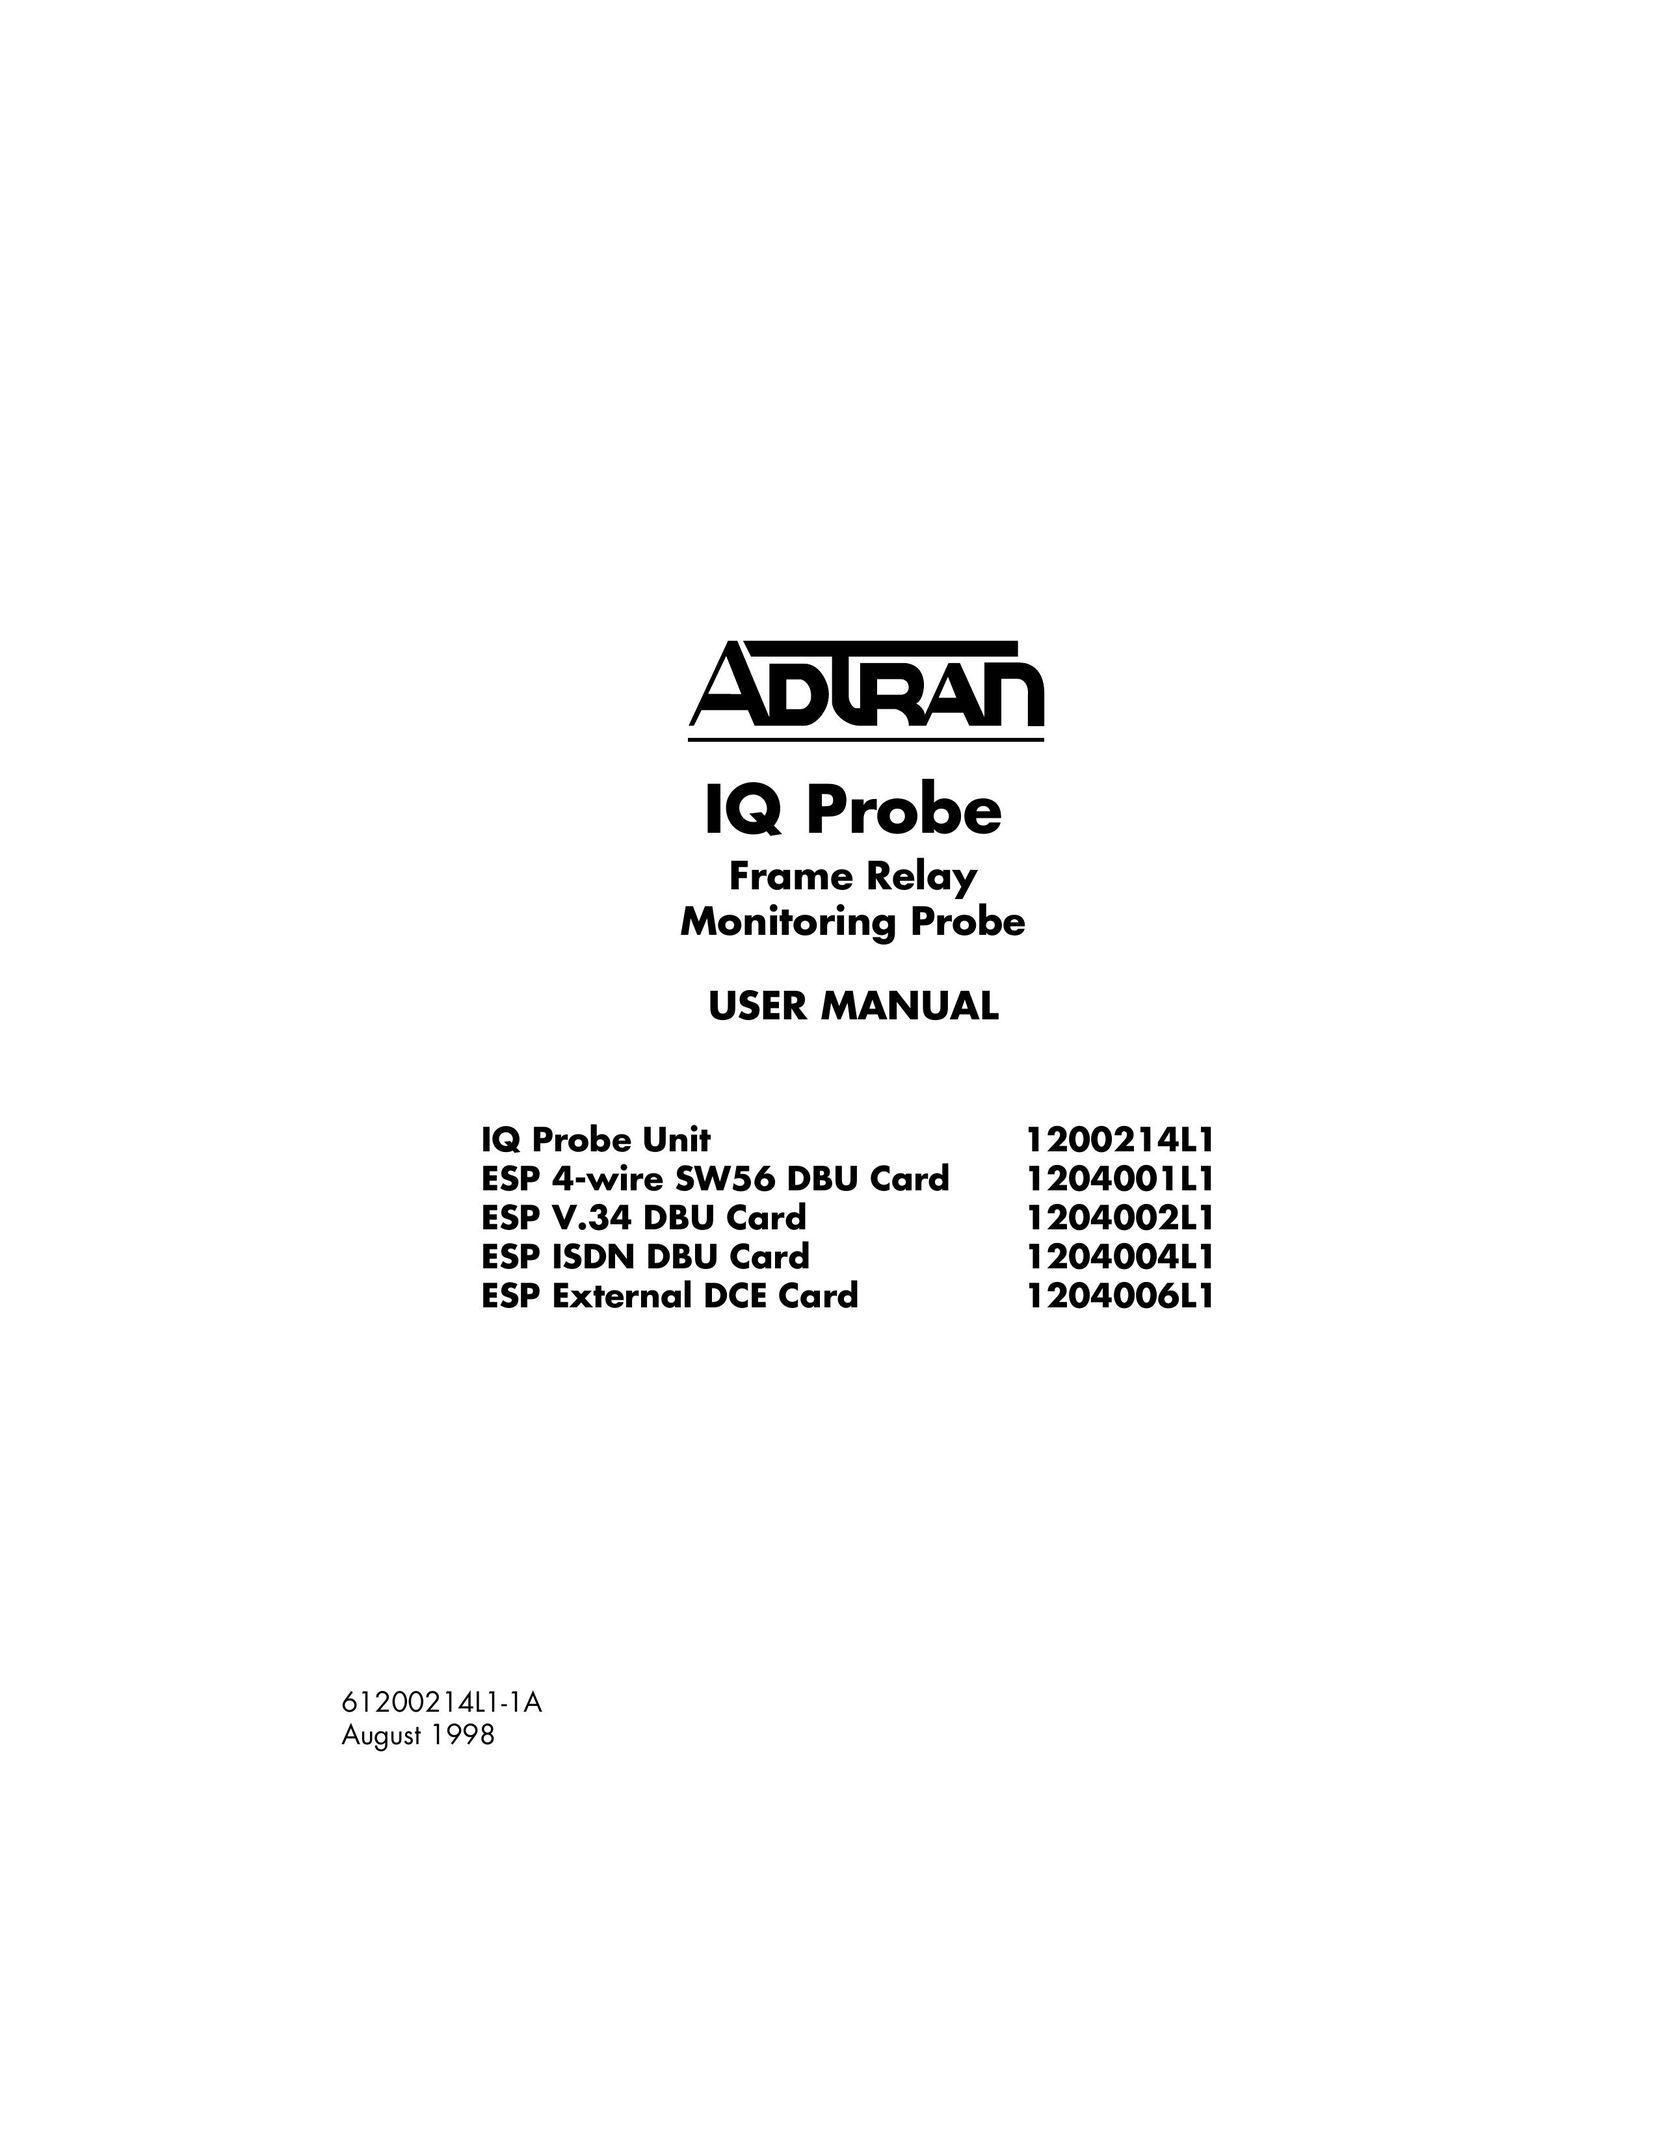 ADTRAN 1204002L1 Network Card User Manual